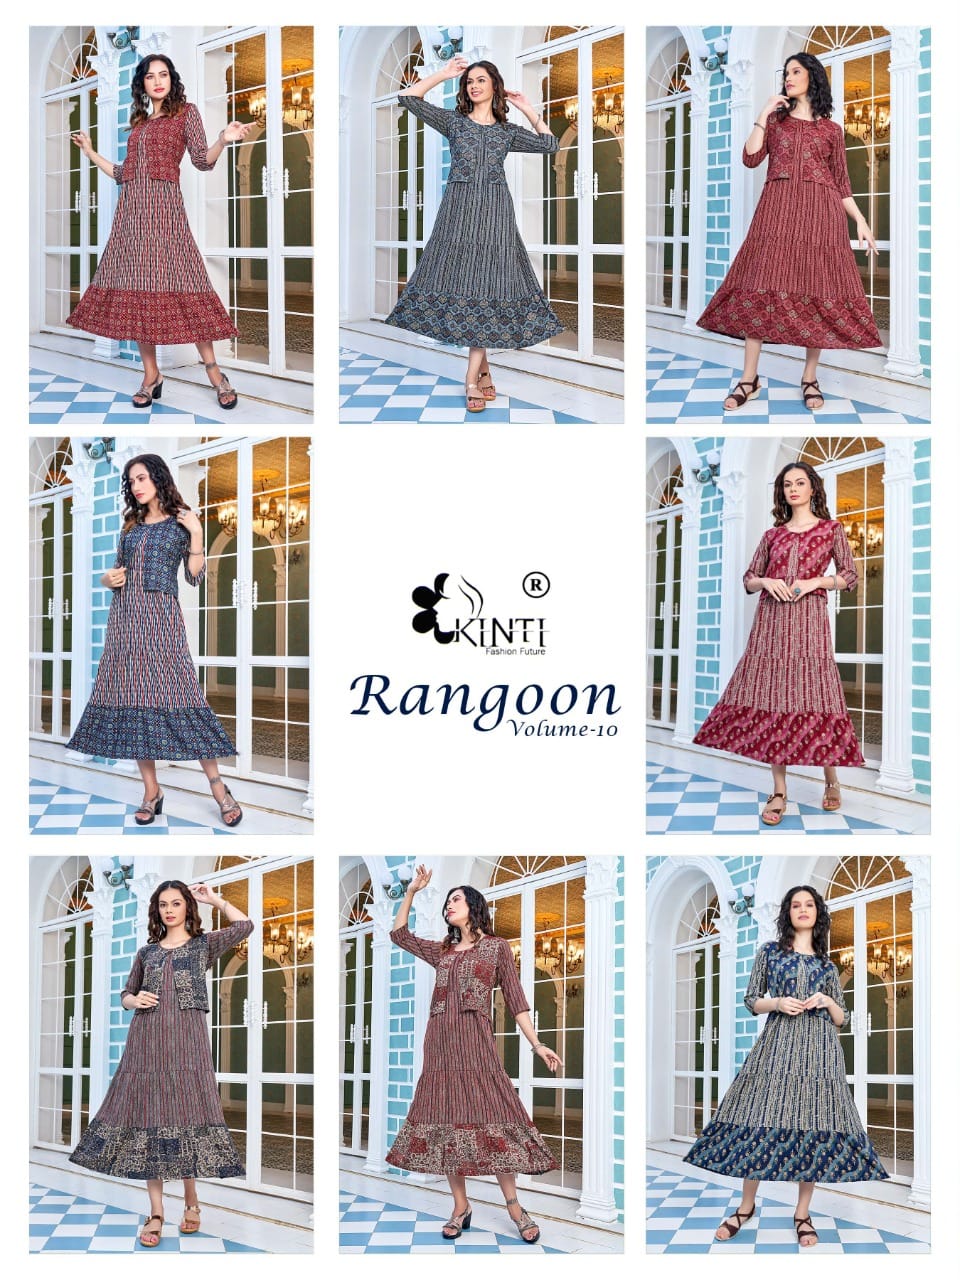 Kinti Rangoon Vol 10 collection 2